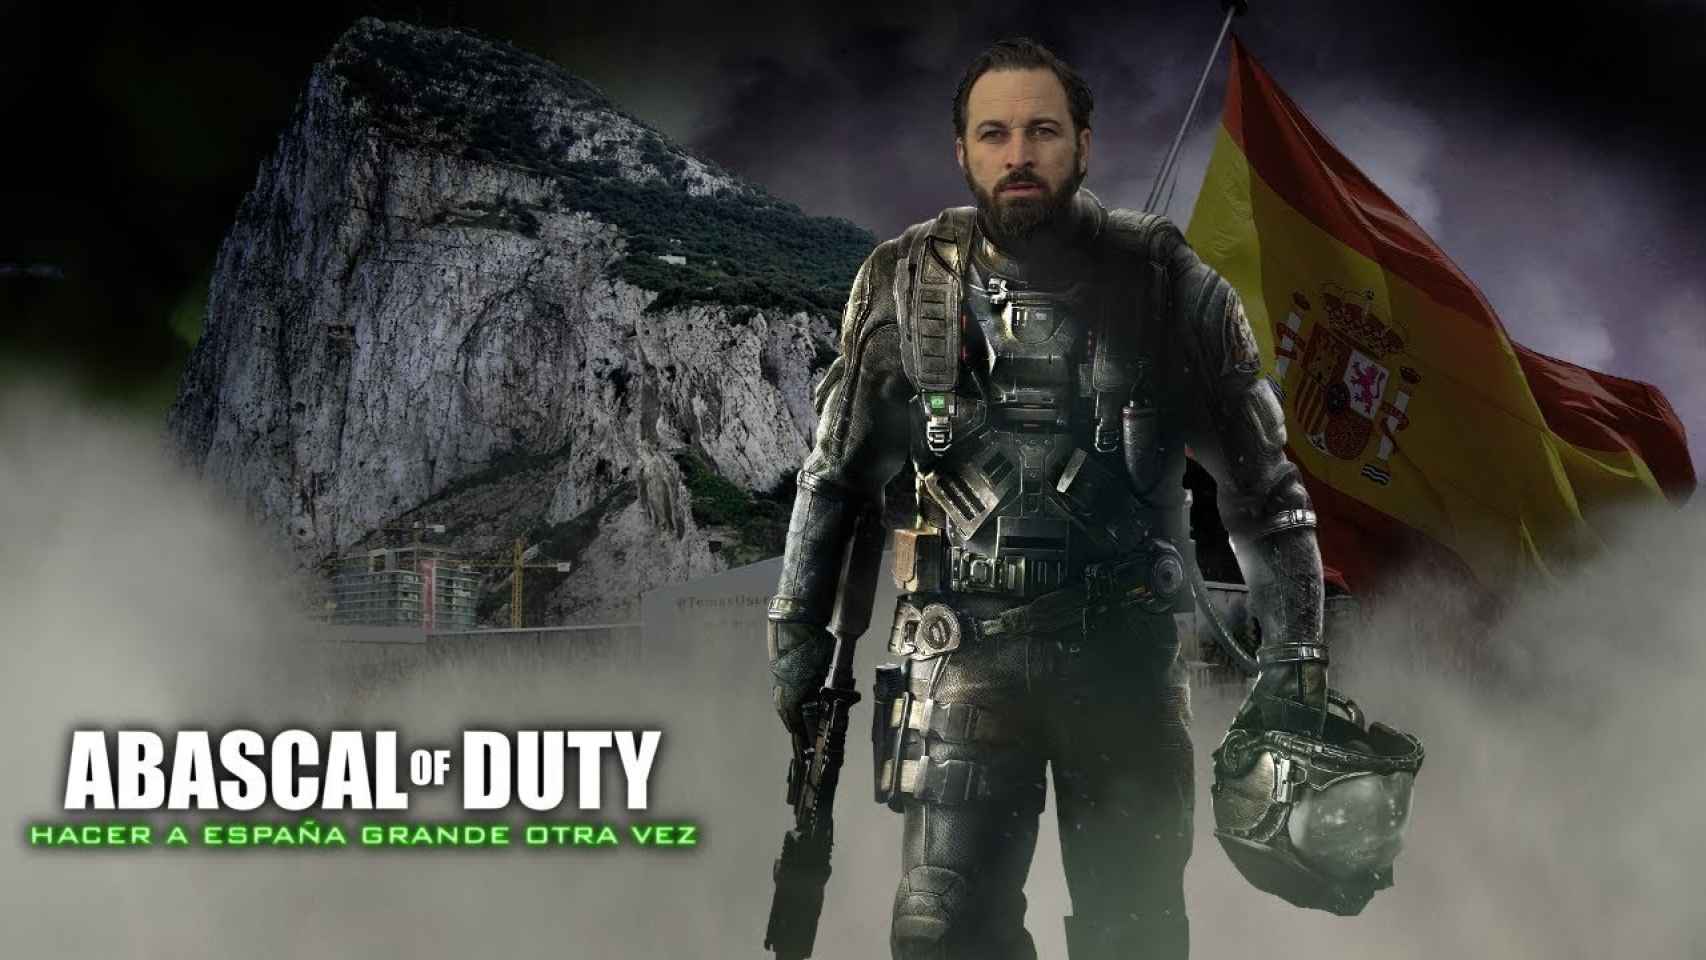 Son muchos los memes que circulan sobre Santi Abascal, como esta parodia del videojuego bélico Call of Duty'